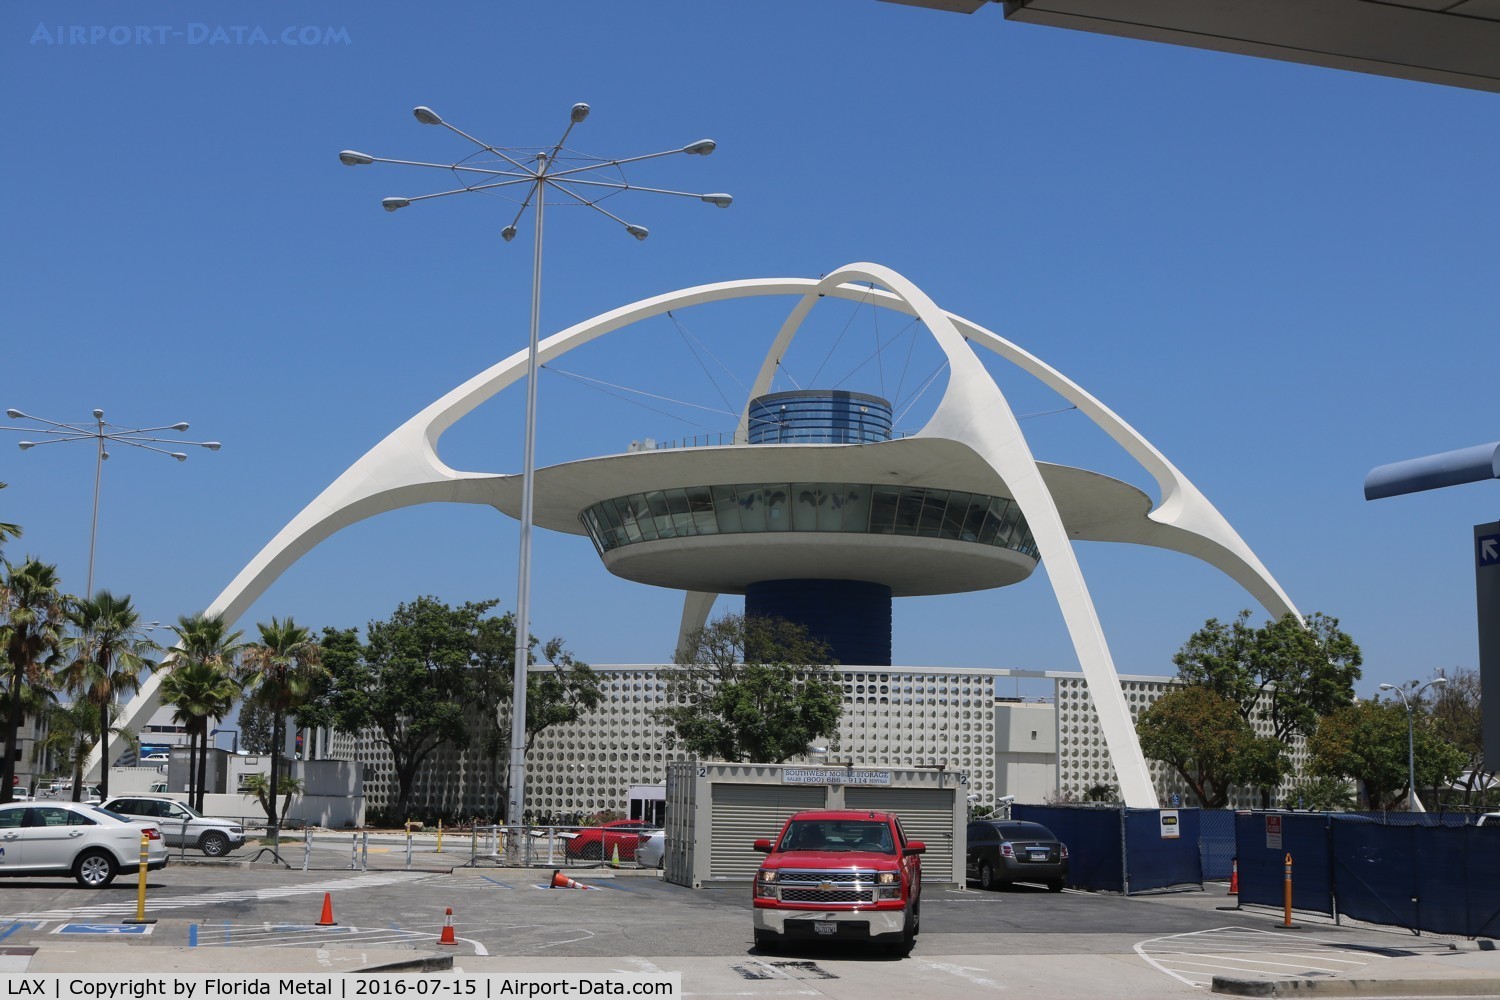 Los Angeles International Airport (LAX) - Theme building